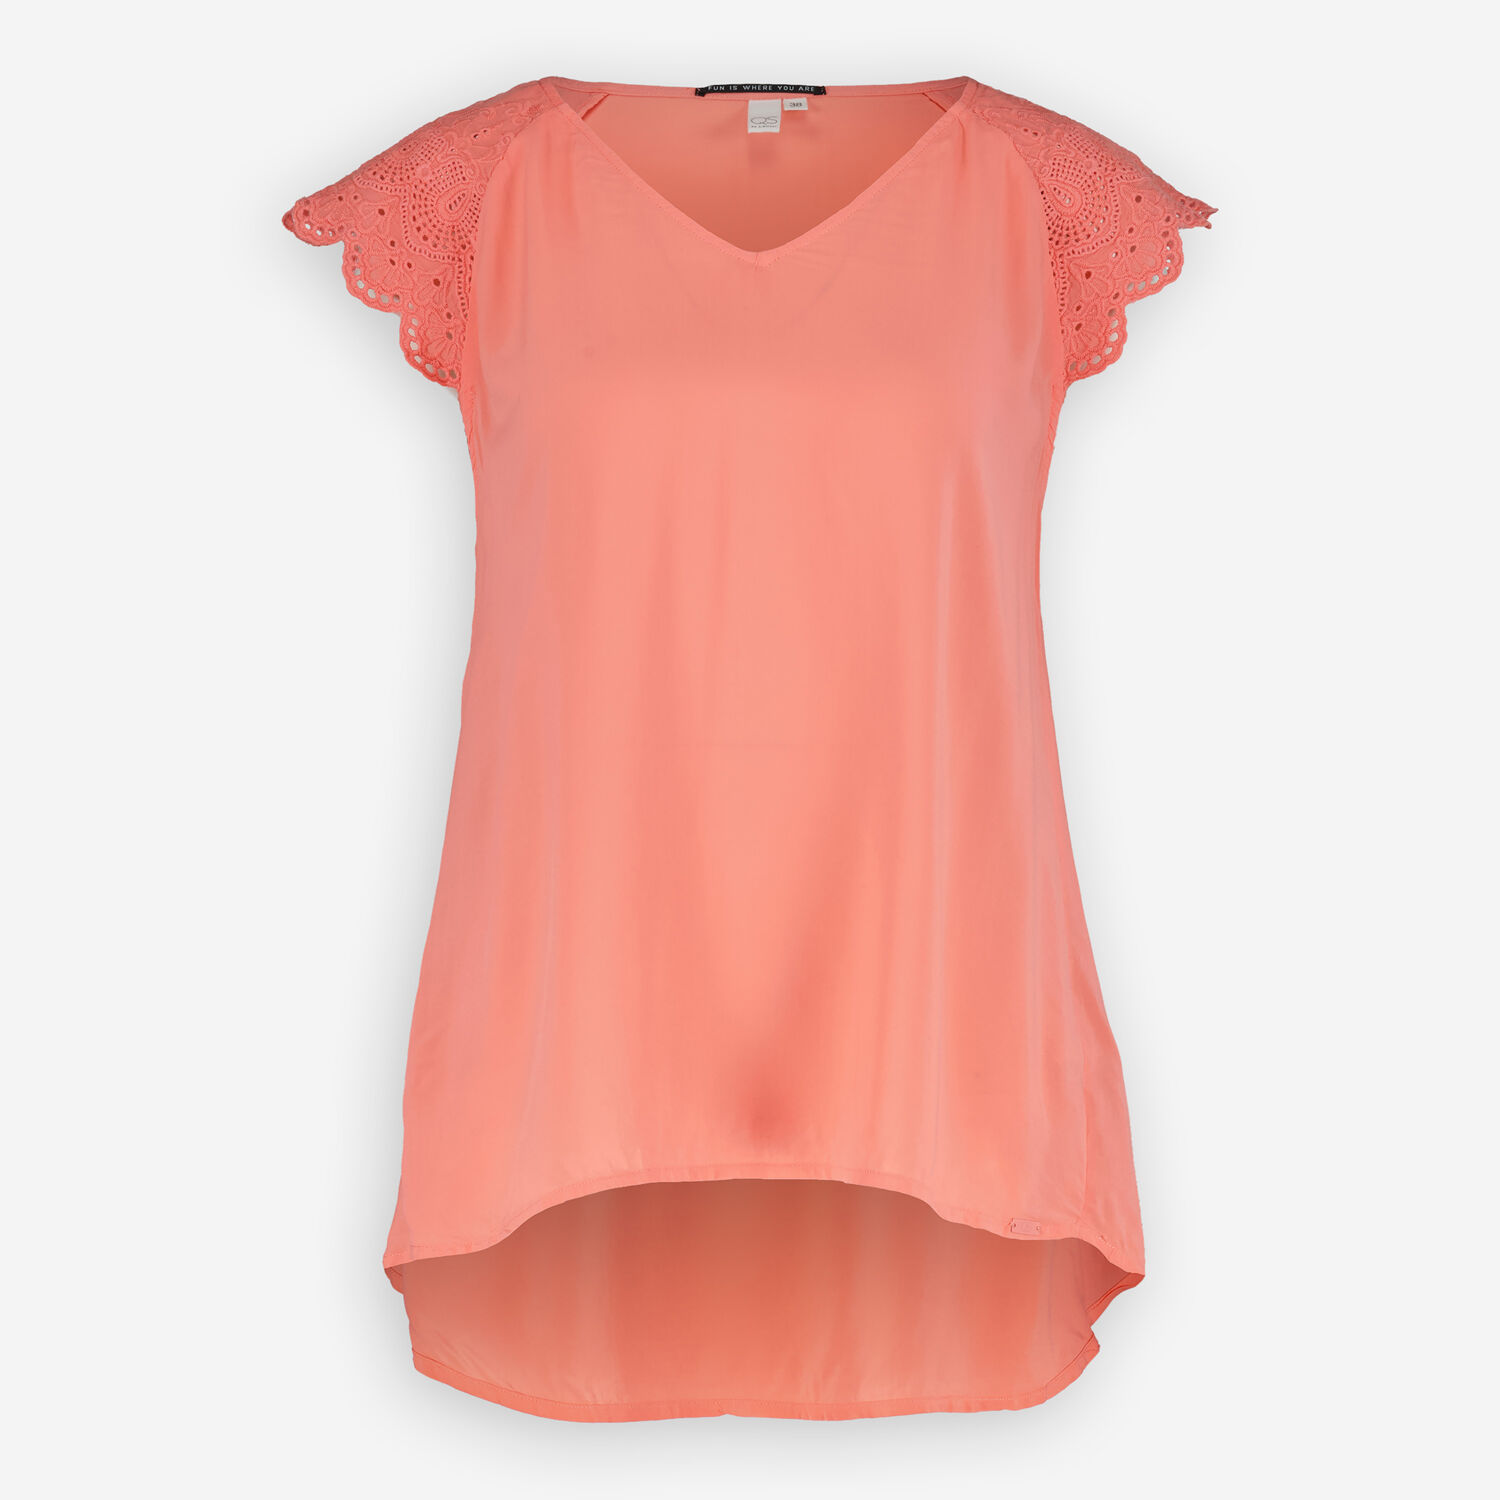 Розовая блузка без рукавов с вышивкой на плечах QS by s. Oliver шредер rexel promax qs 8 12 s eu